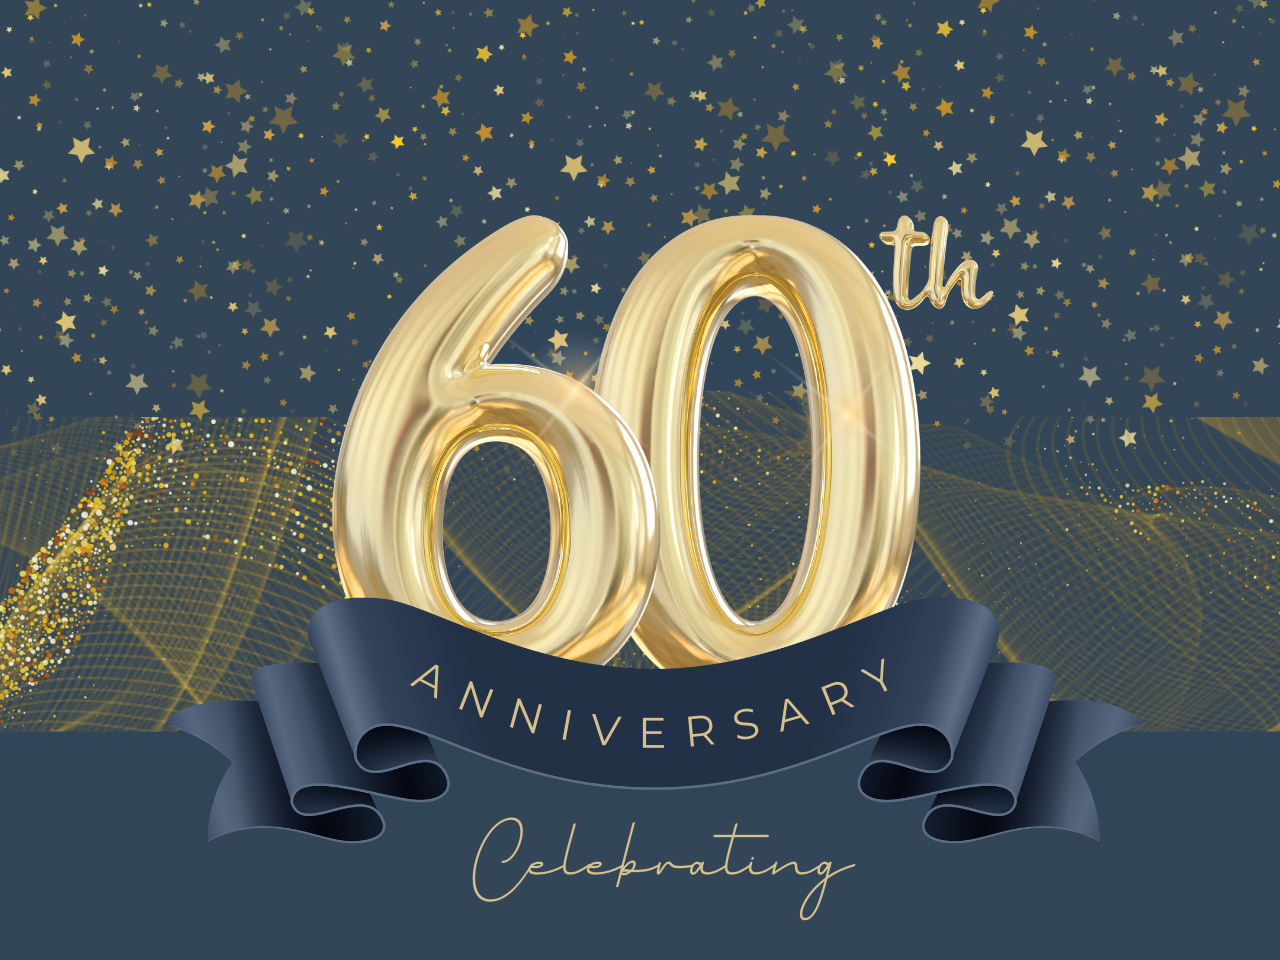 Portadown Credit Union celebrates 60 years